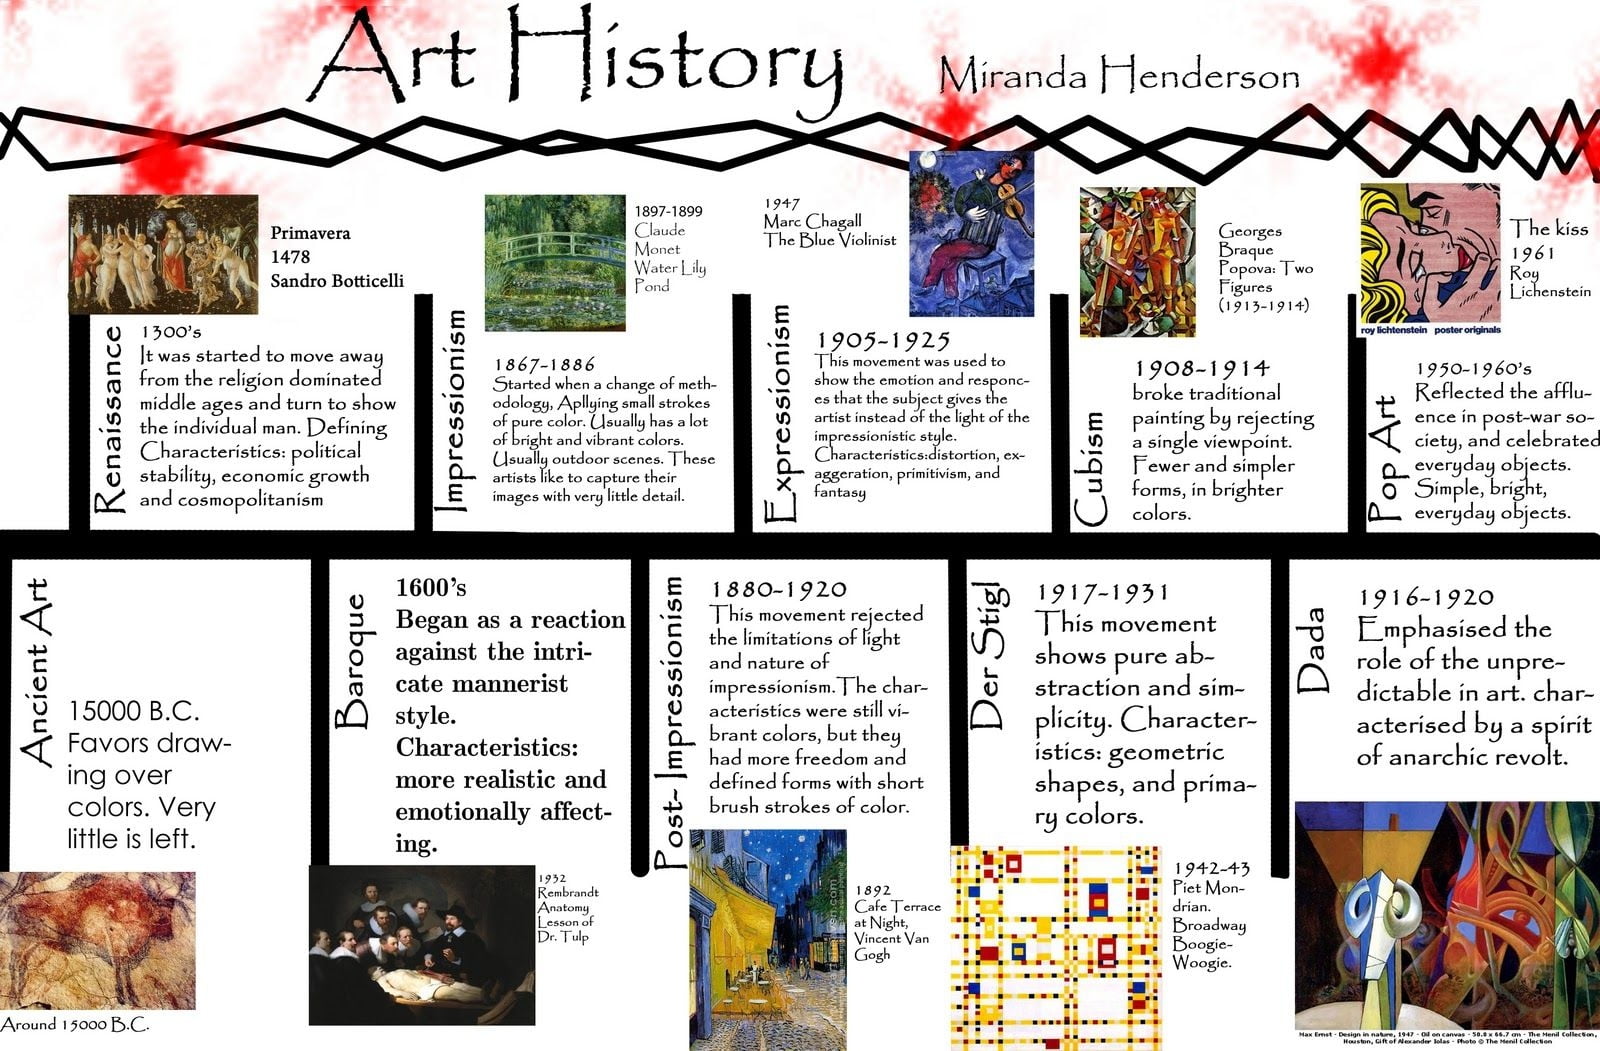 Printable Art History Timeline